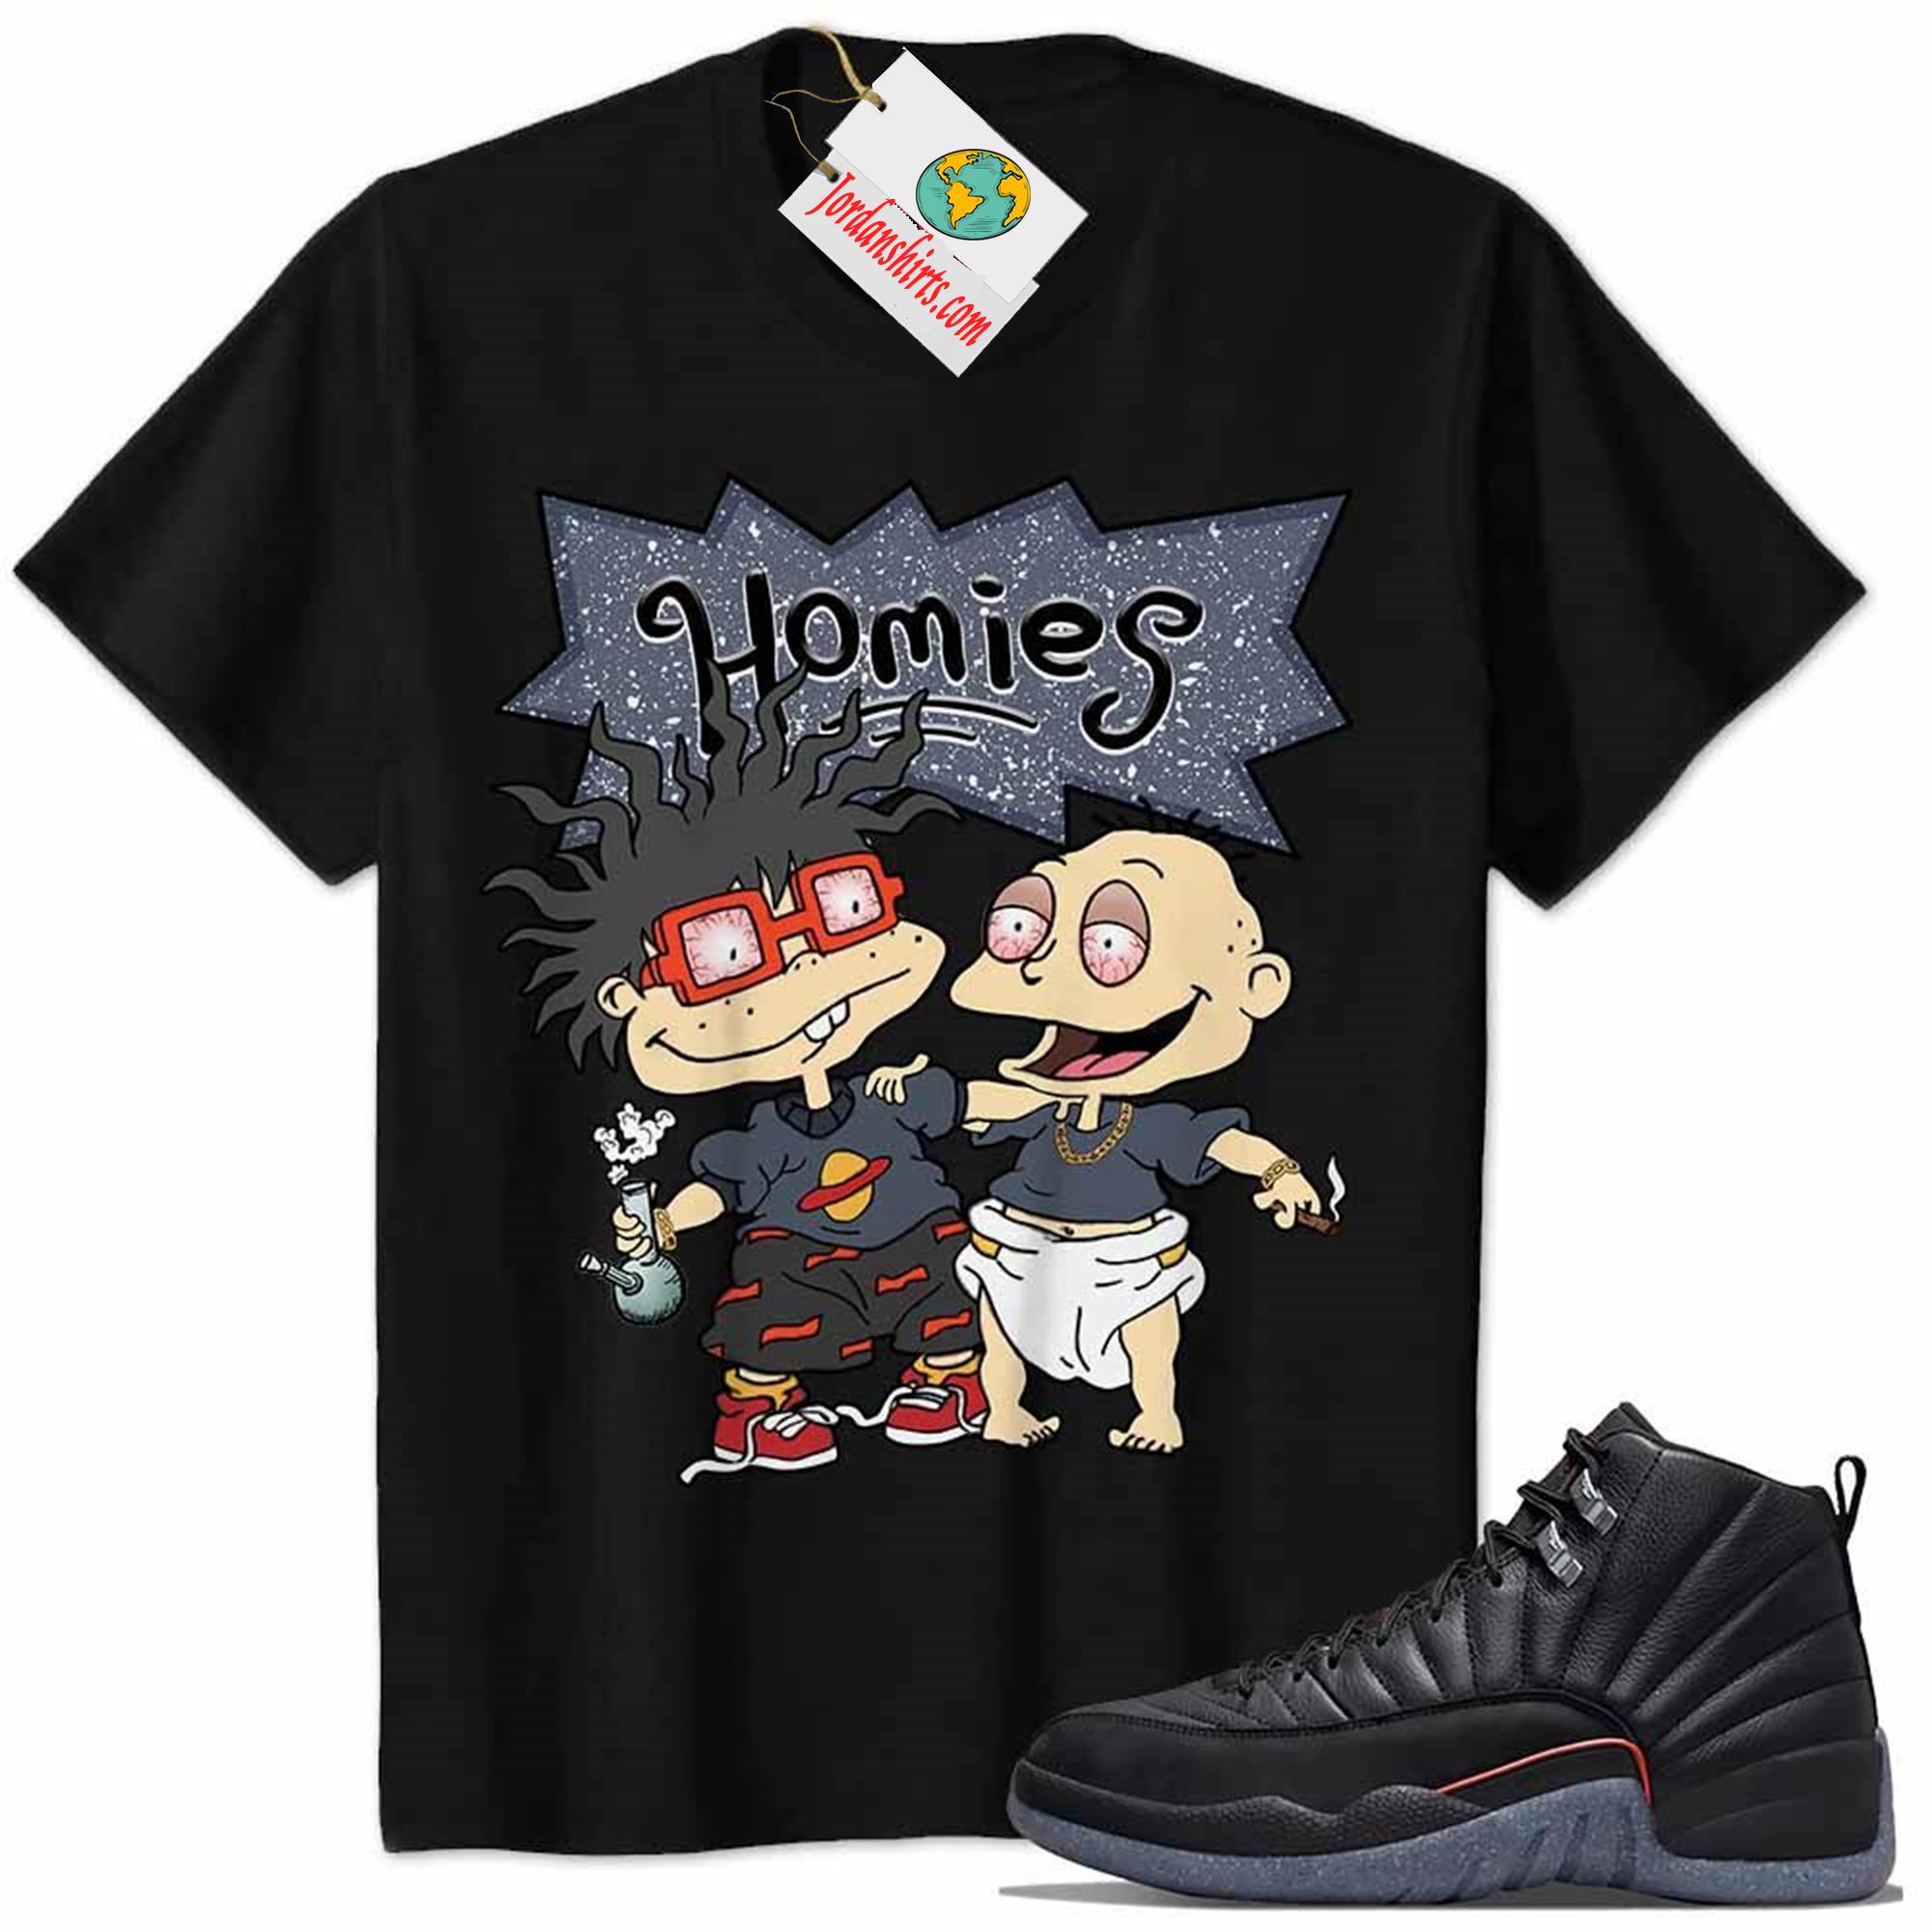 Jordan 12 Shirt, Jordan 12 Utility Grind Shirt Hommies Tommy Pickles Chuckie Finster Rugrats Black Full Size Up To 5xl